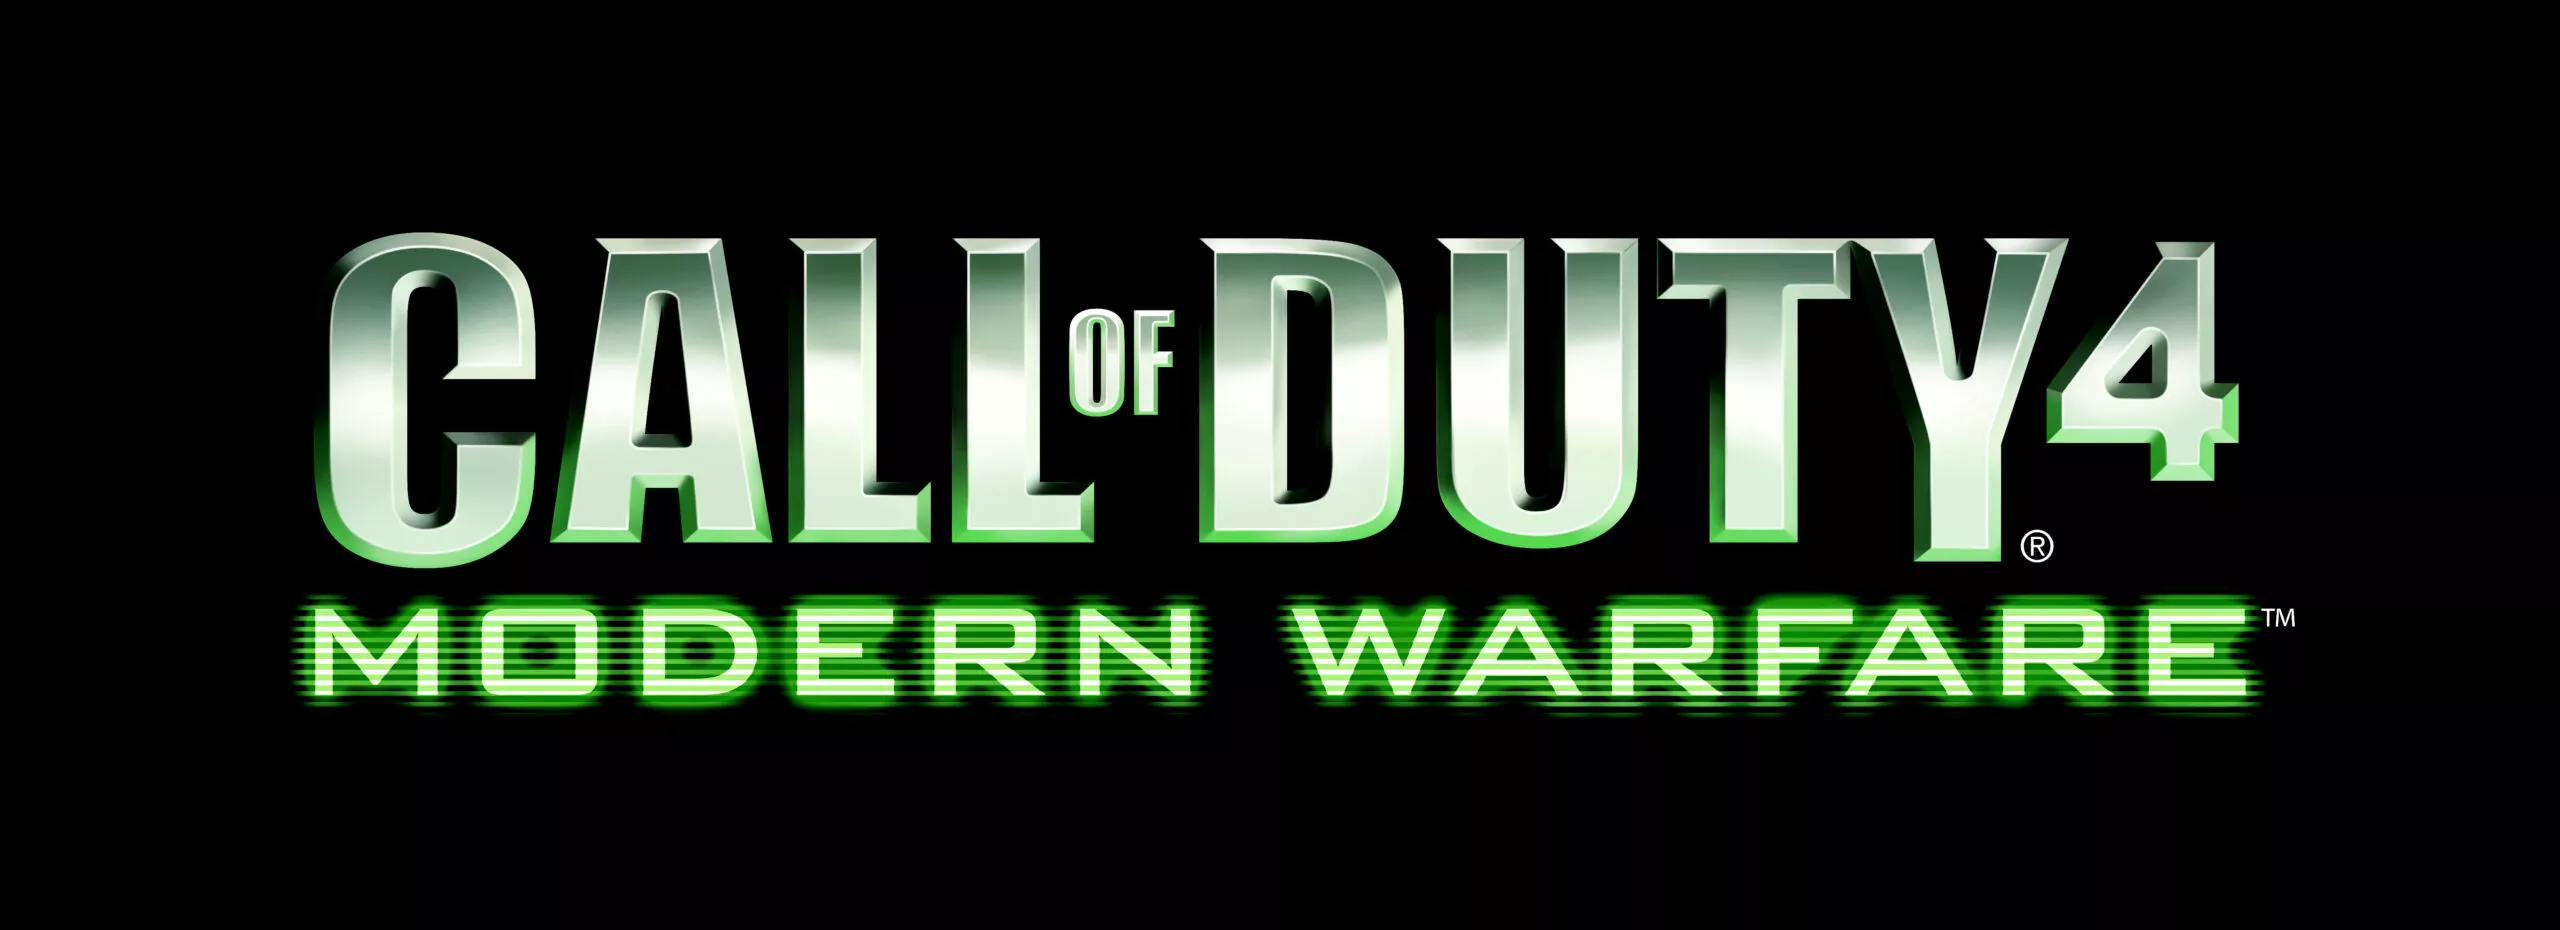 Call of Duty 4 Modern Warfare Download Free Full Game